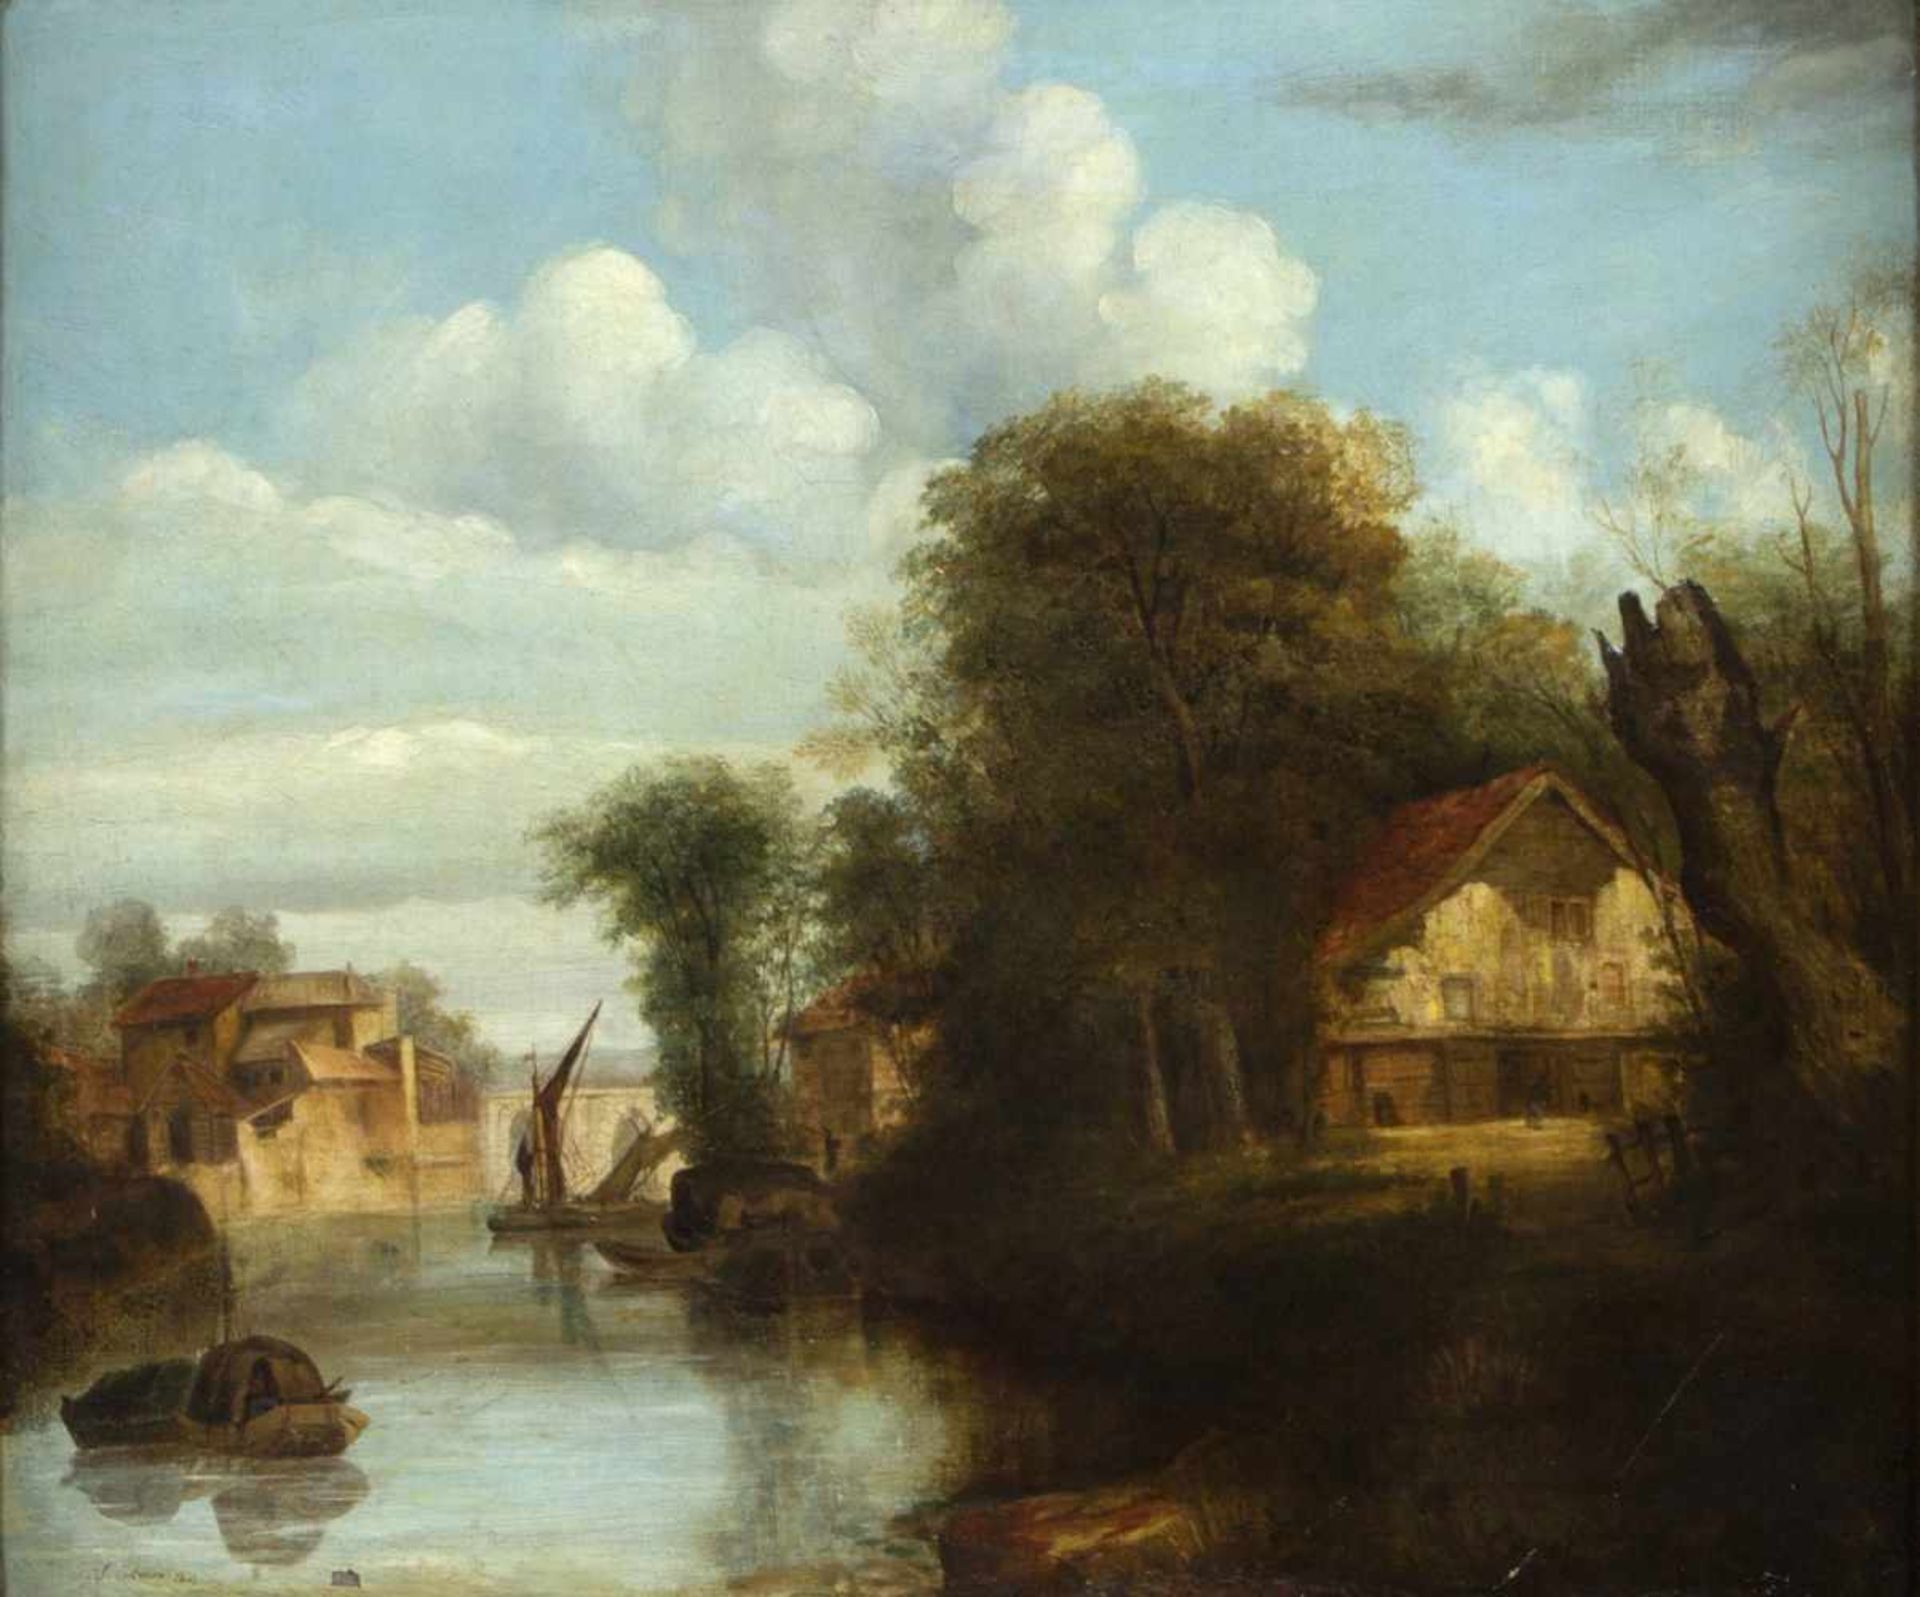 Cotman, John Sell. 1782 Norwich - London 1842Dorf an einem Fluss. Öl/Lwd. Sign. und dat. 1823. 63,